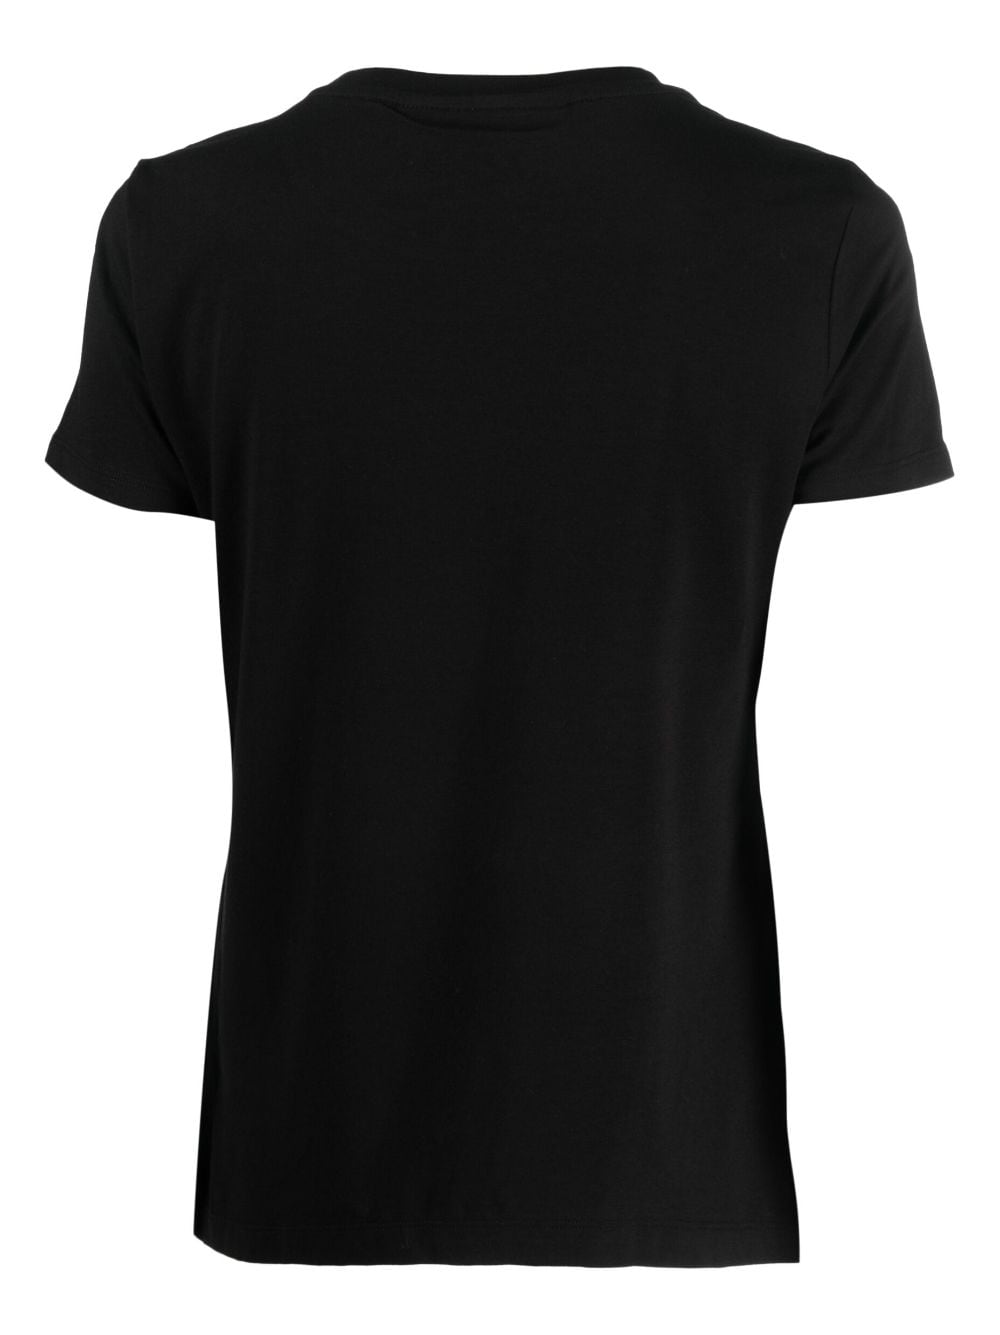 DKNY Lace Panelled Shirt, $323, farfetch.com